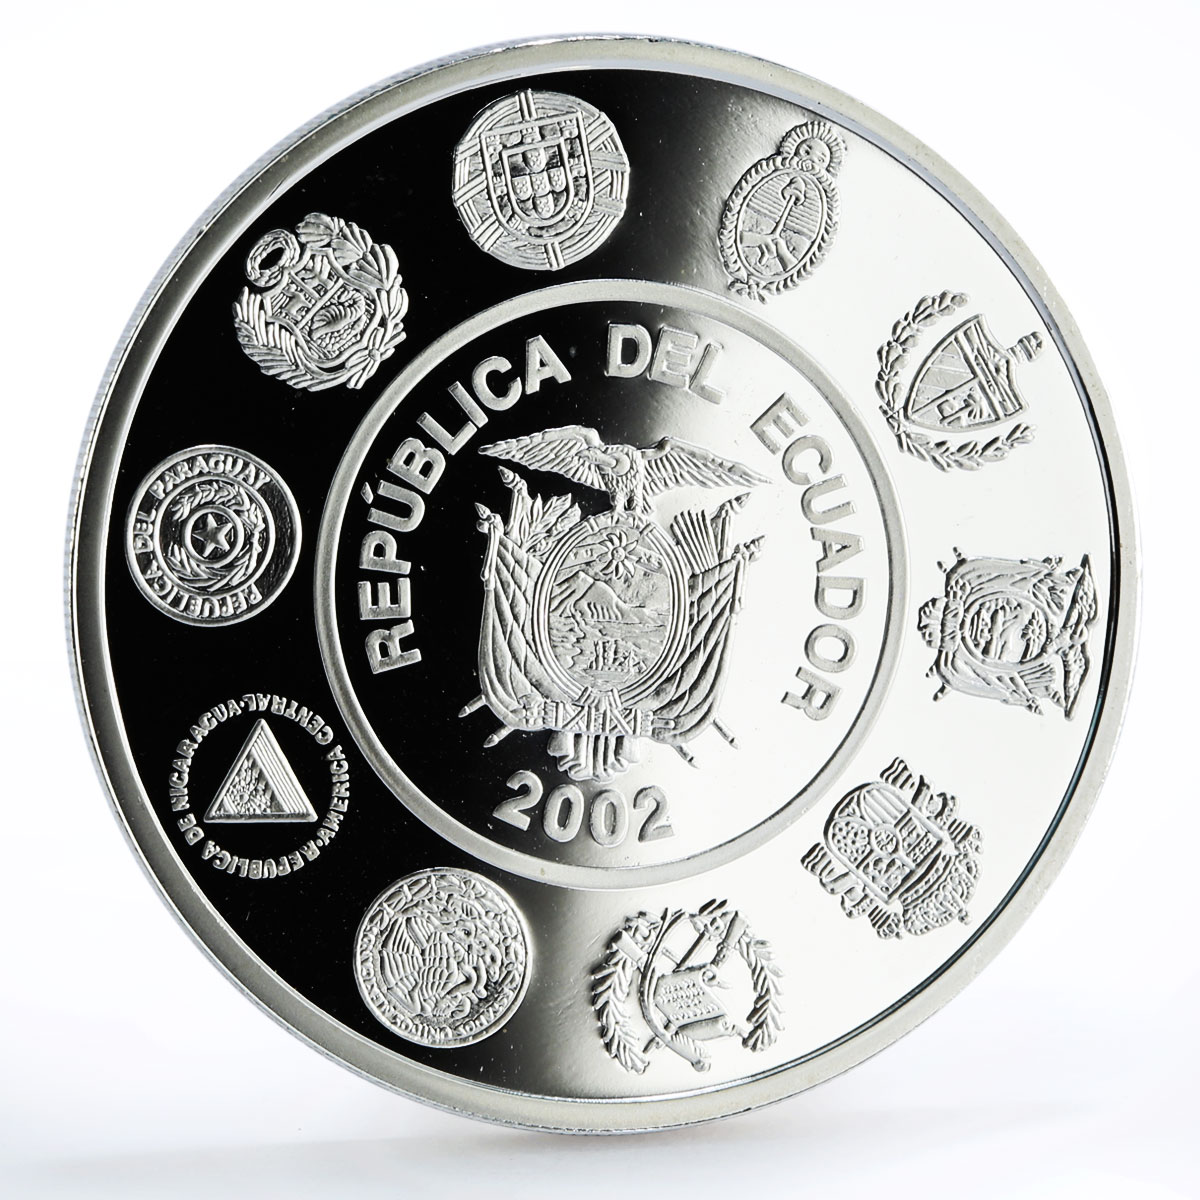 Ecuador 25000 sucres Balsawood Sailing Raft Ship proof silver coin 2002